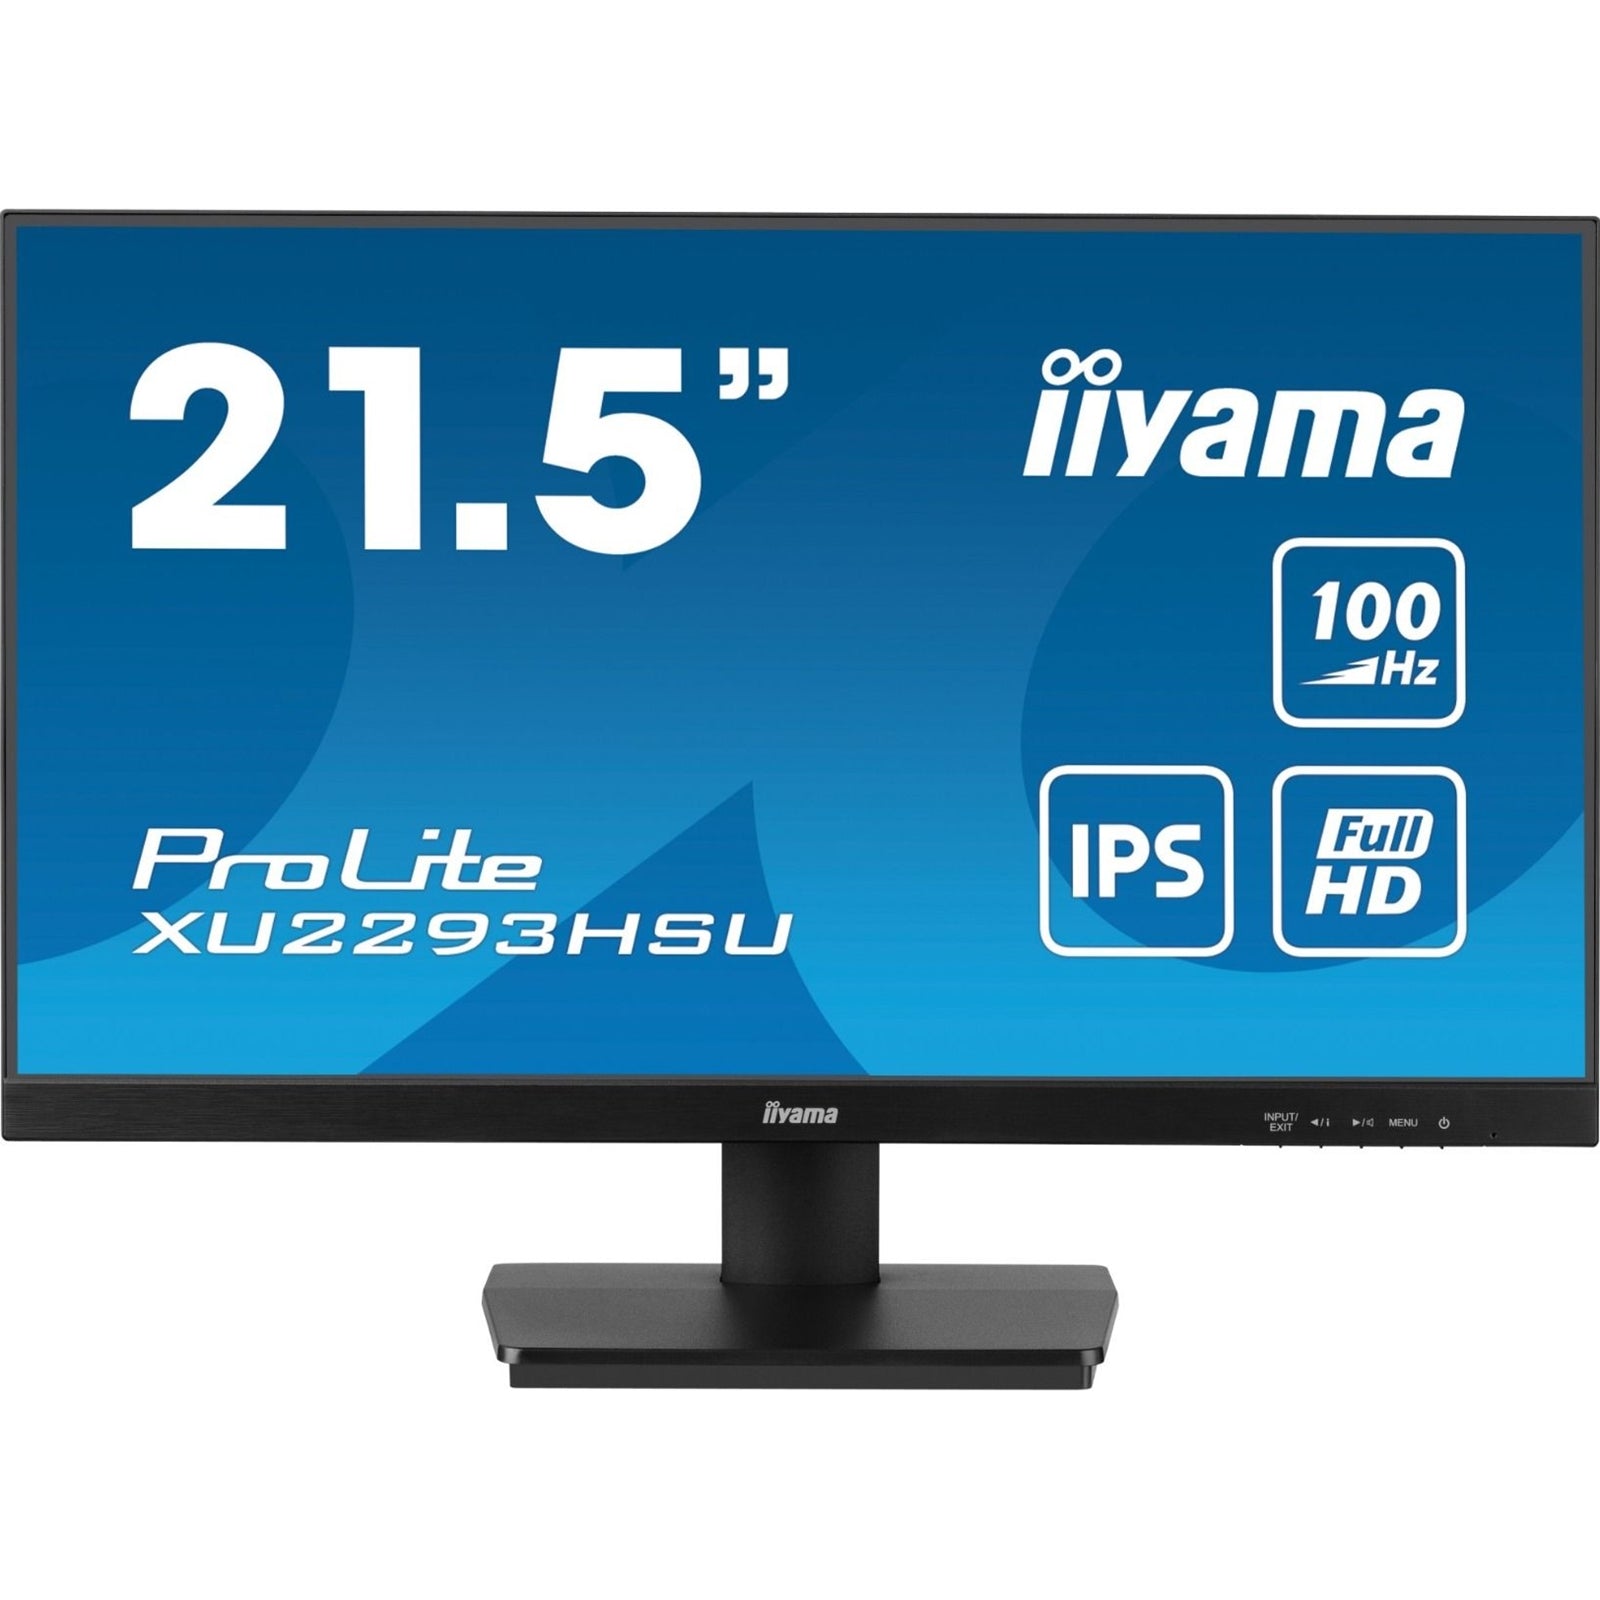 iiyama Prolite XU2293HSU-B6 22 inch IPS Monitor, Full HD, 1ms, HDMI, Display Port, 100Hz, Speakers, Black, Internal PSU, VESA